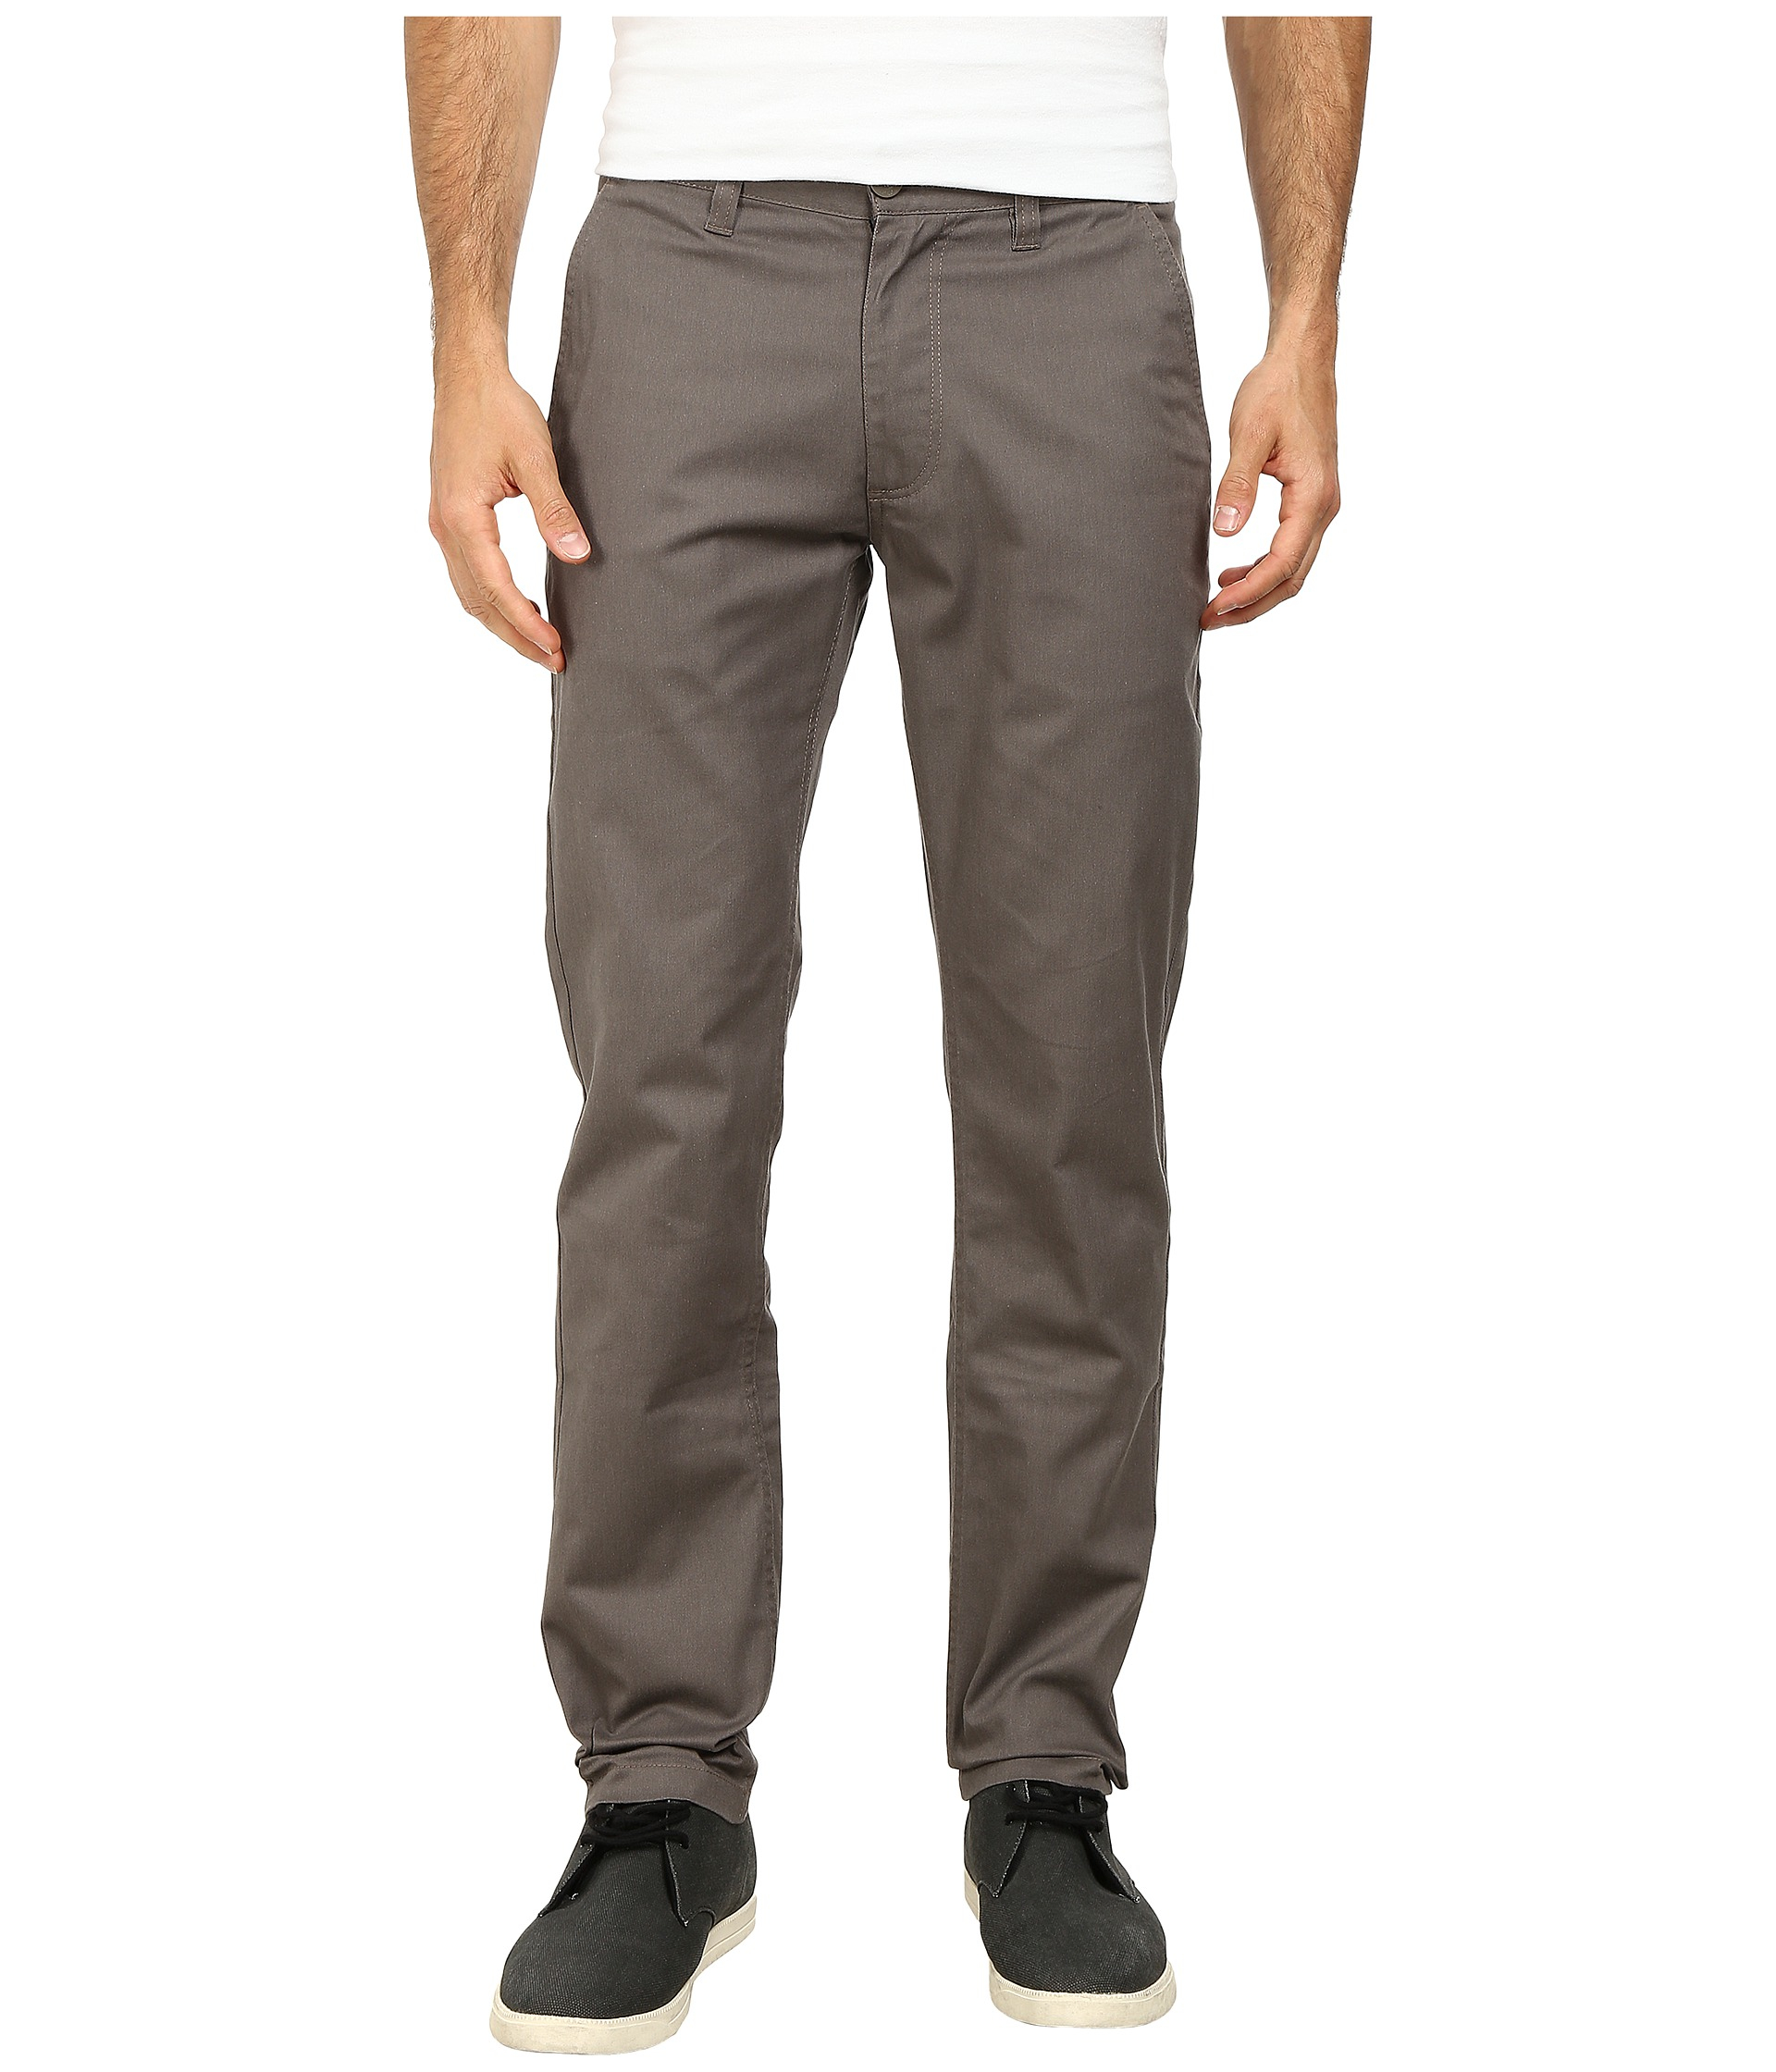 Brixton Grain Chino Pants in Grey (Gray) for Men - Lyst